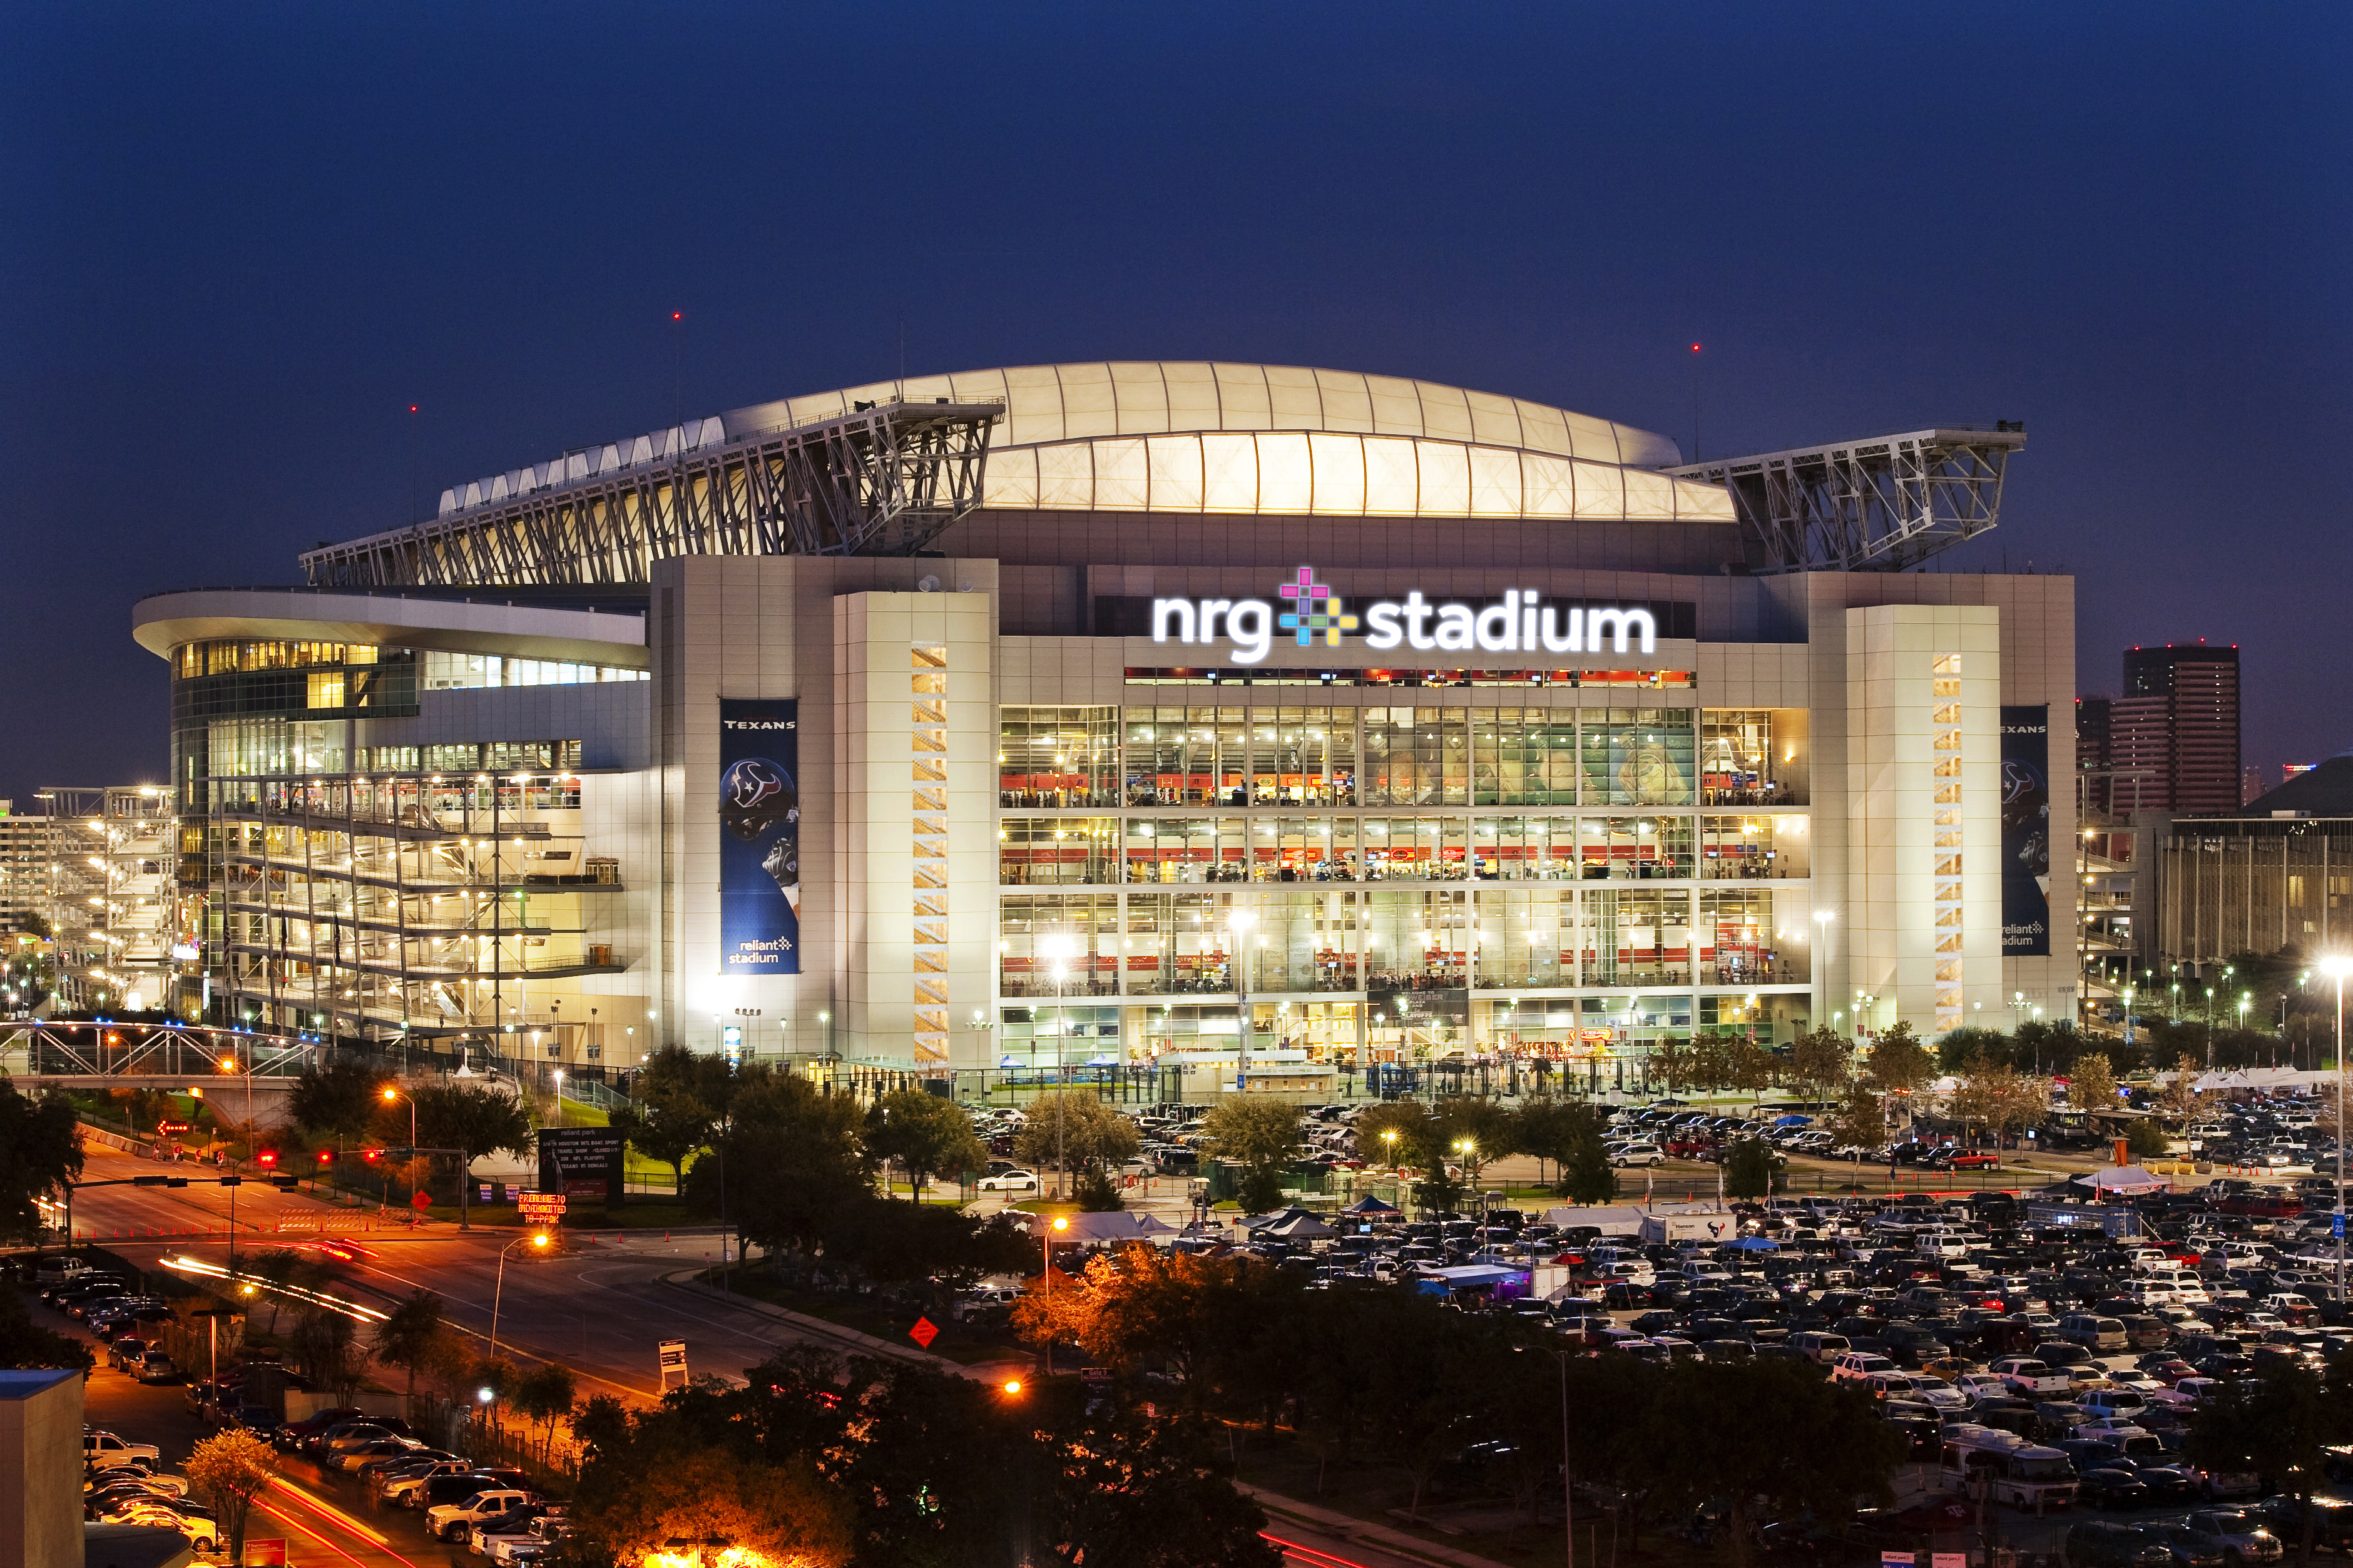 NRG Stadium sports major upgrades ahead of Super Bowl 51 Sports Venue